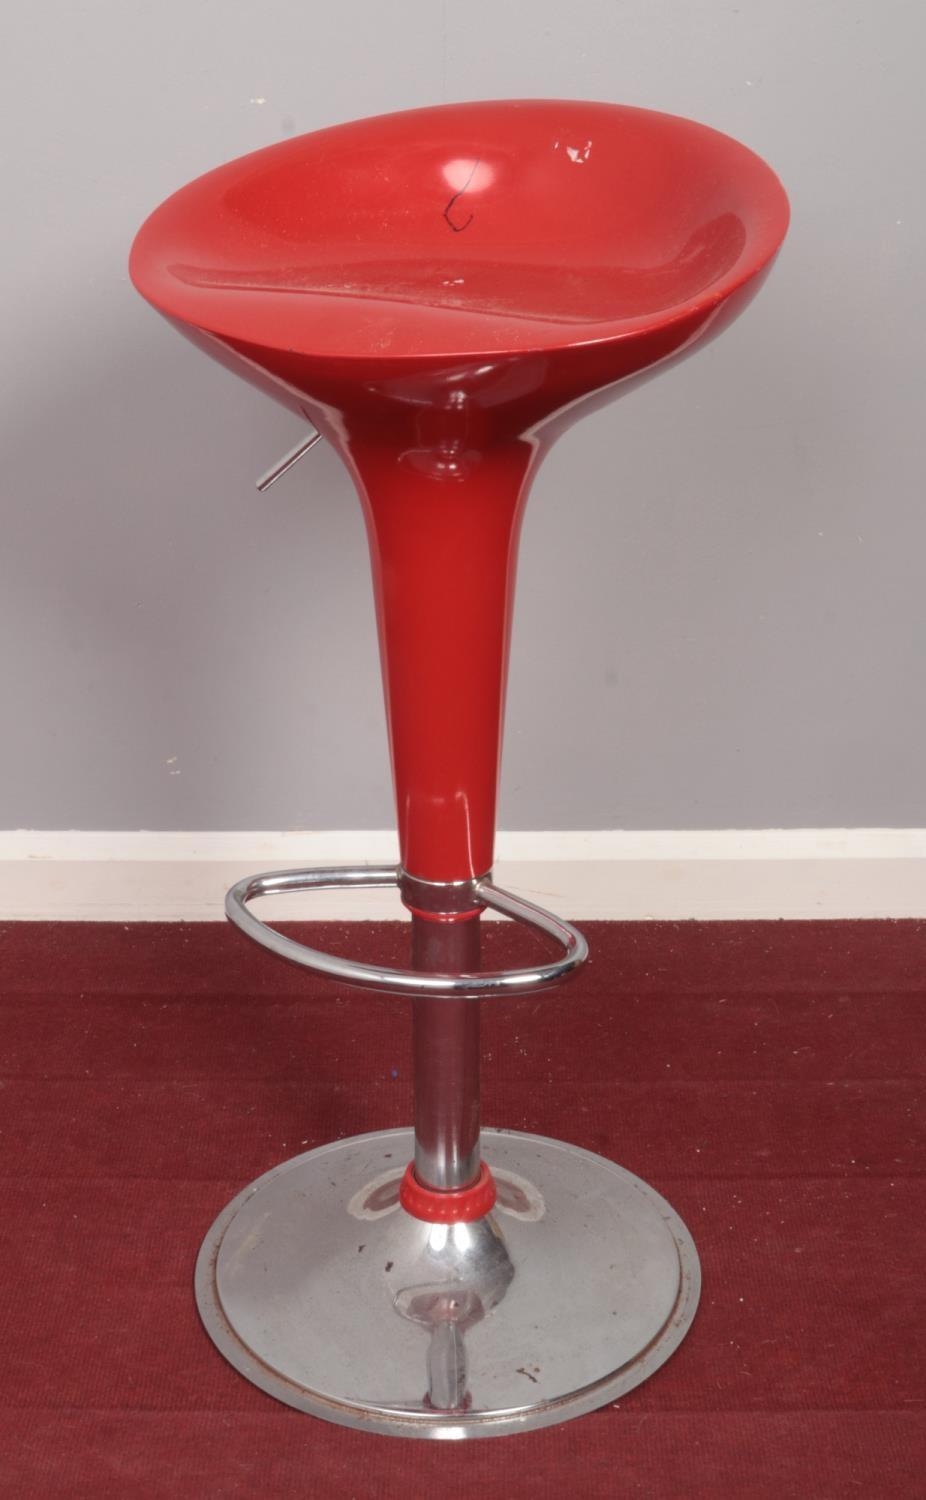 A retro style bar stool.